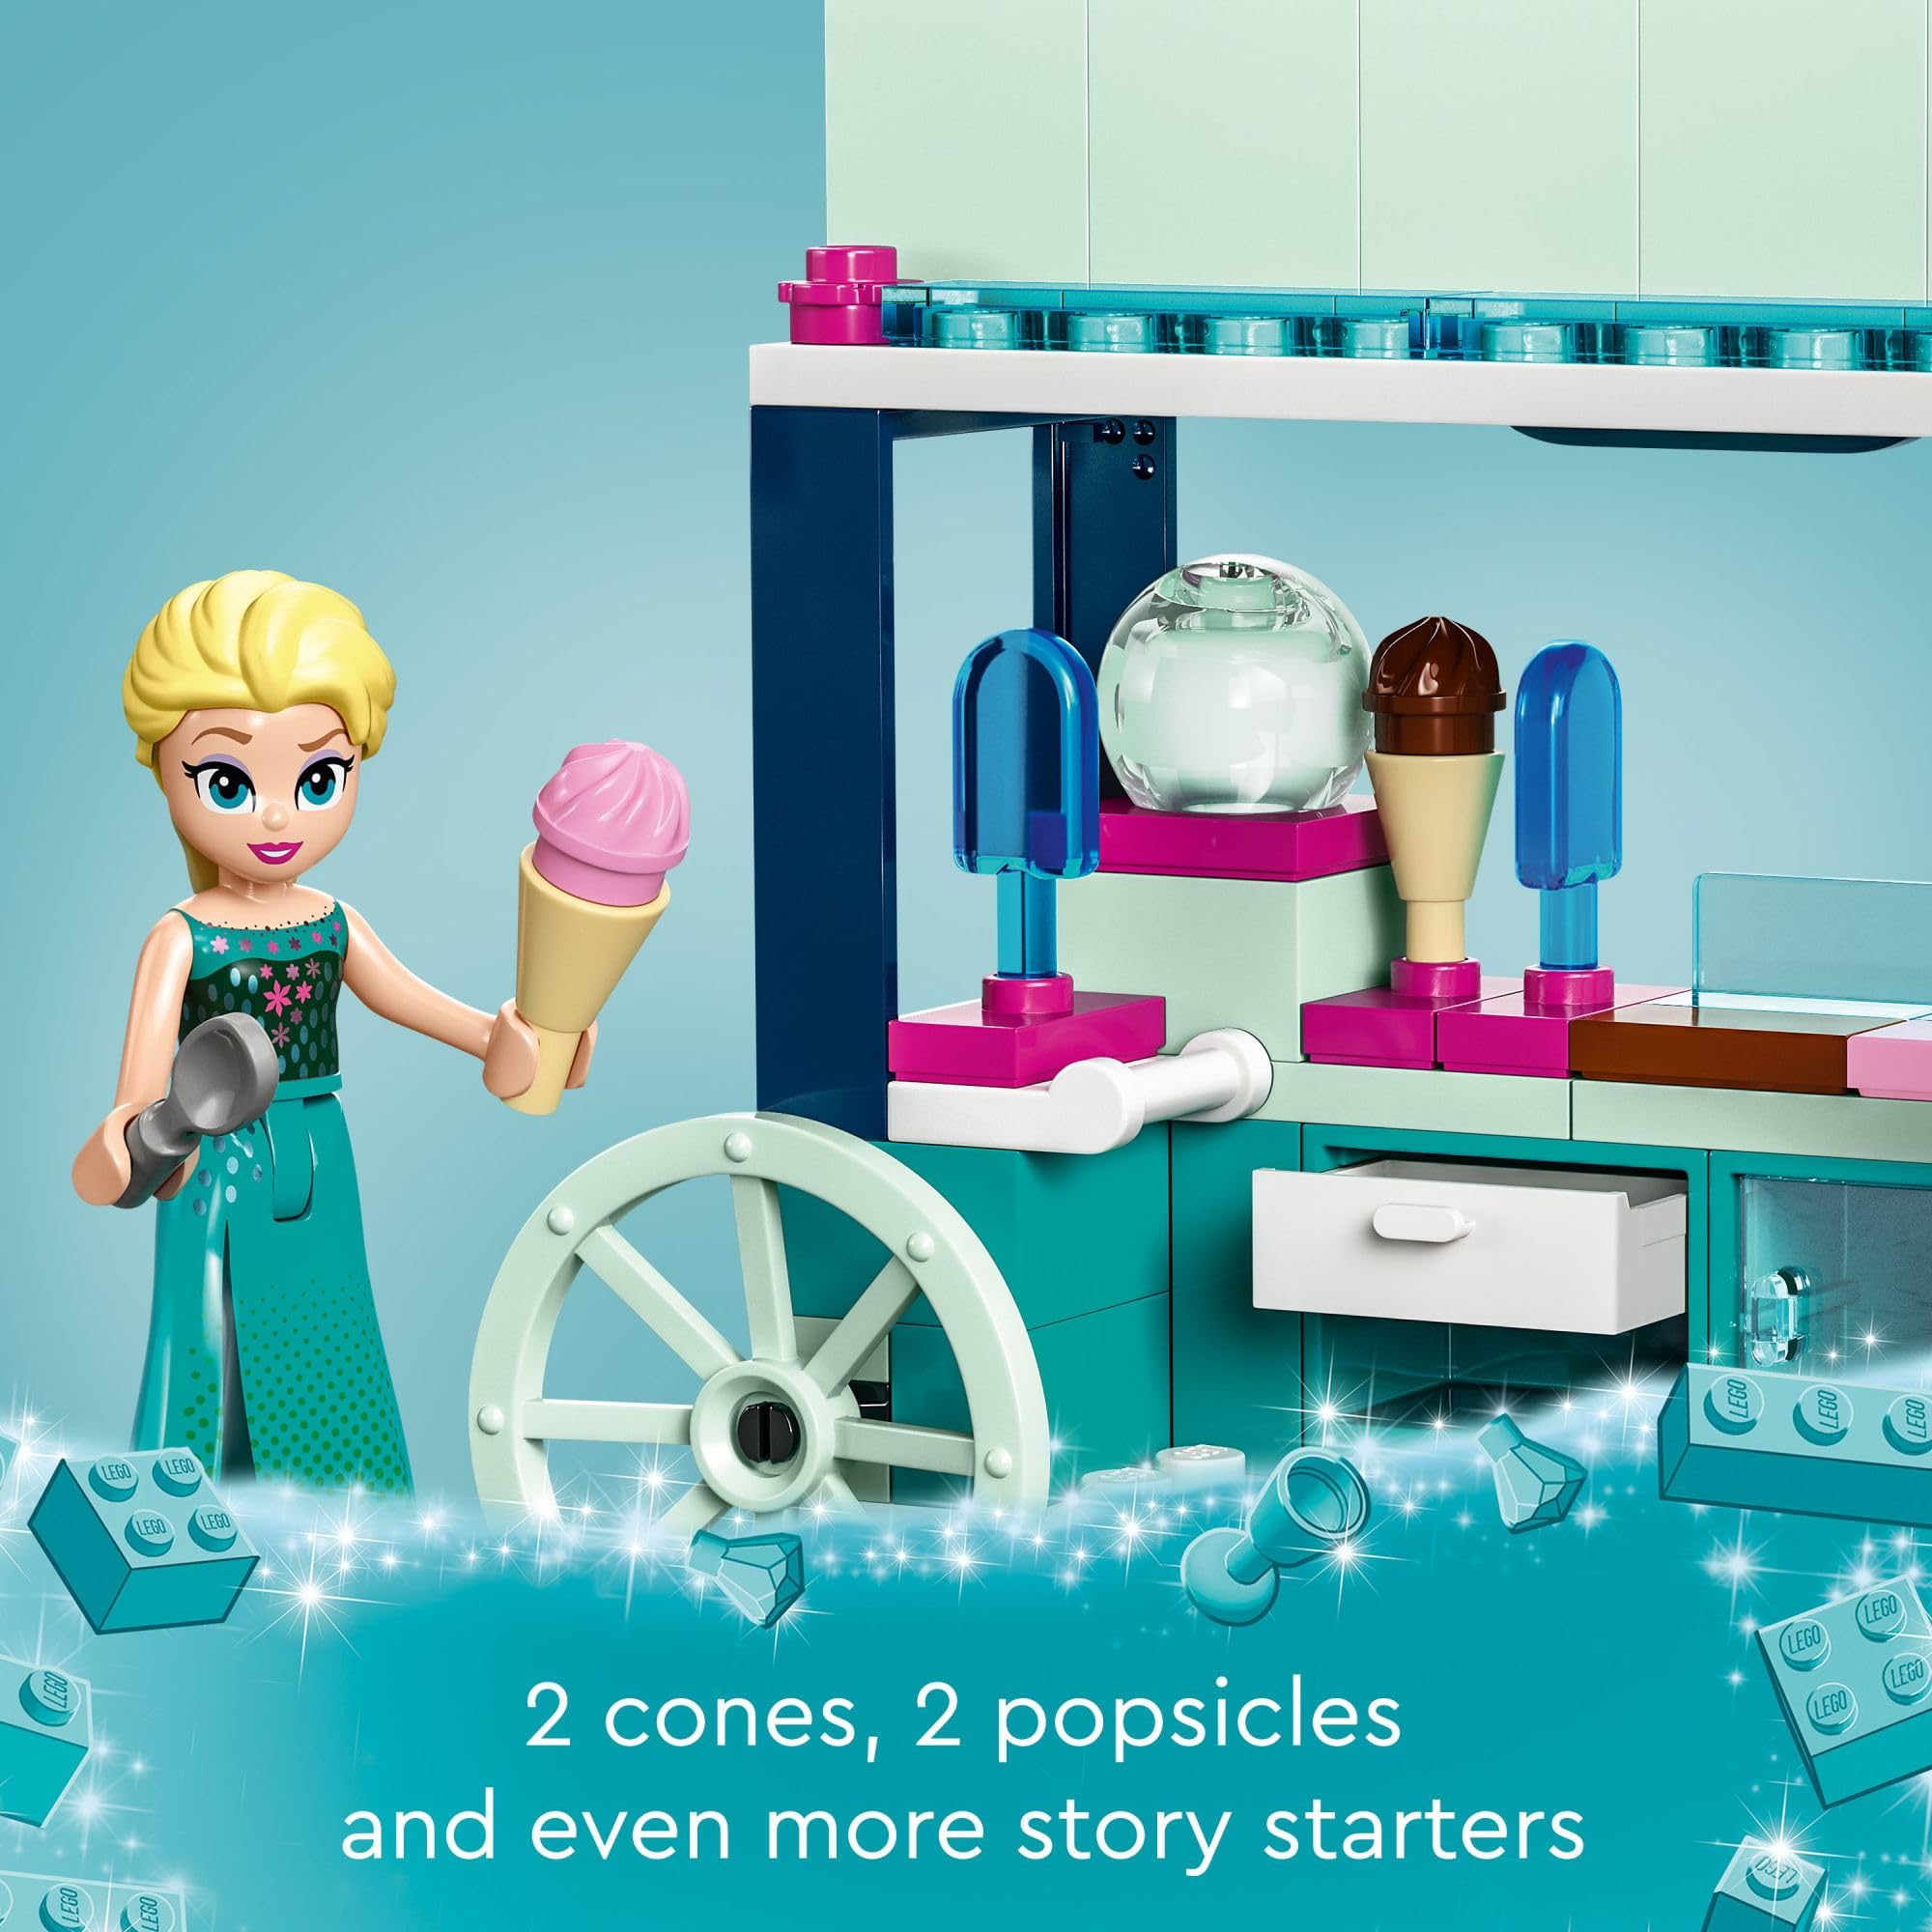 LEGO Disney Frozen Elsa’s Frozen Treats Building Set, Includes Elsa Mini-Doll and a Snowgie Figure, Elsa Toy Makes a Fun Gift for Girls and Boys who Love Frozen Toys, Disney Princess Doll, 43234